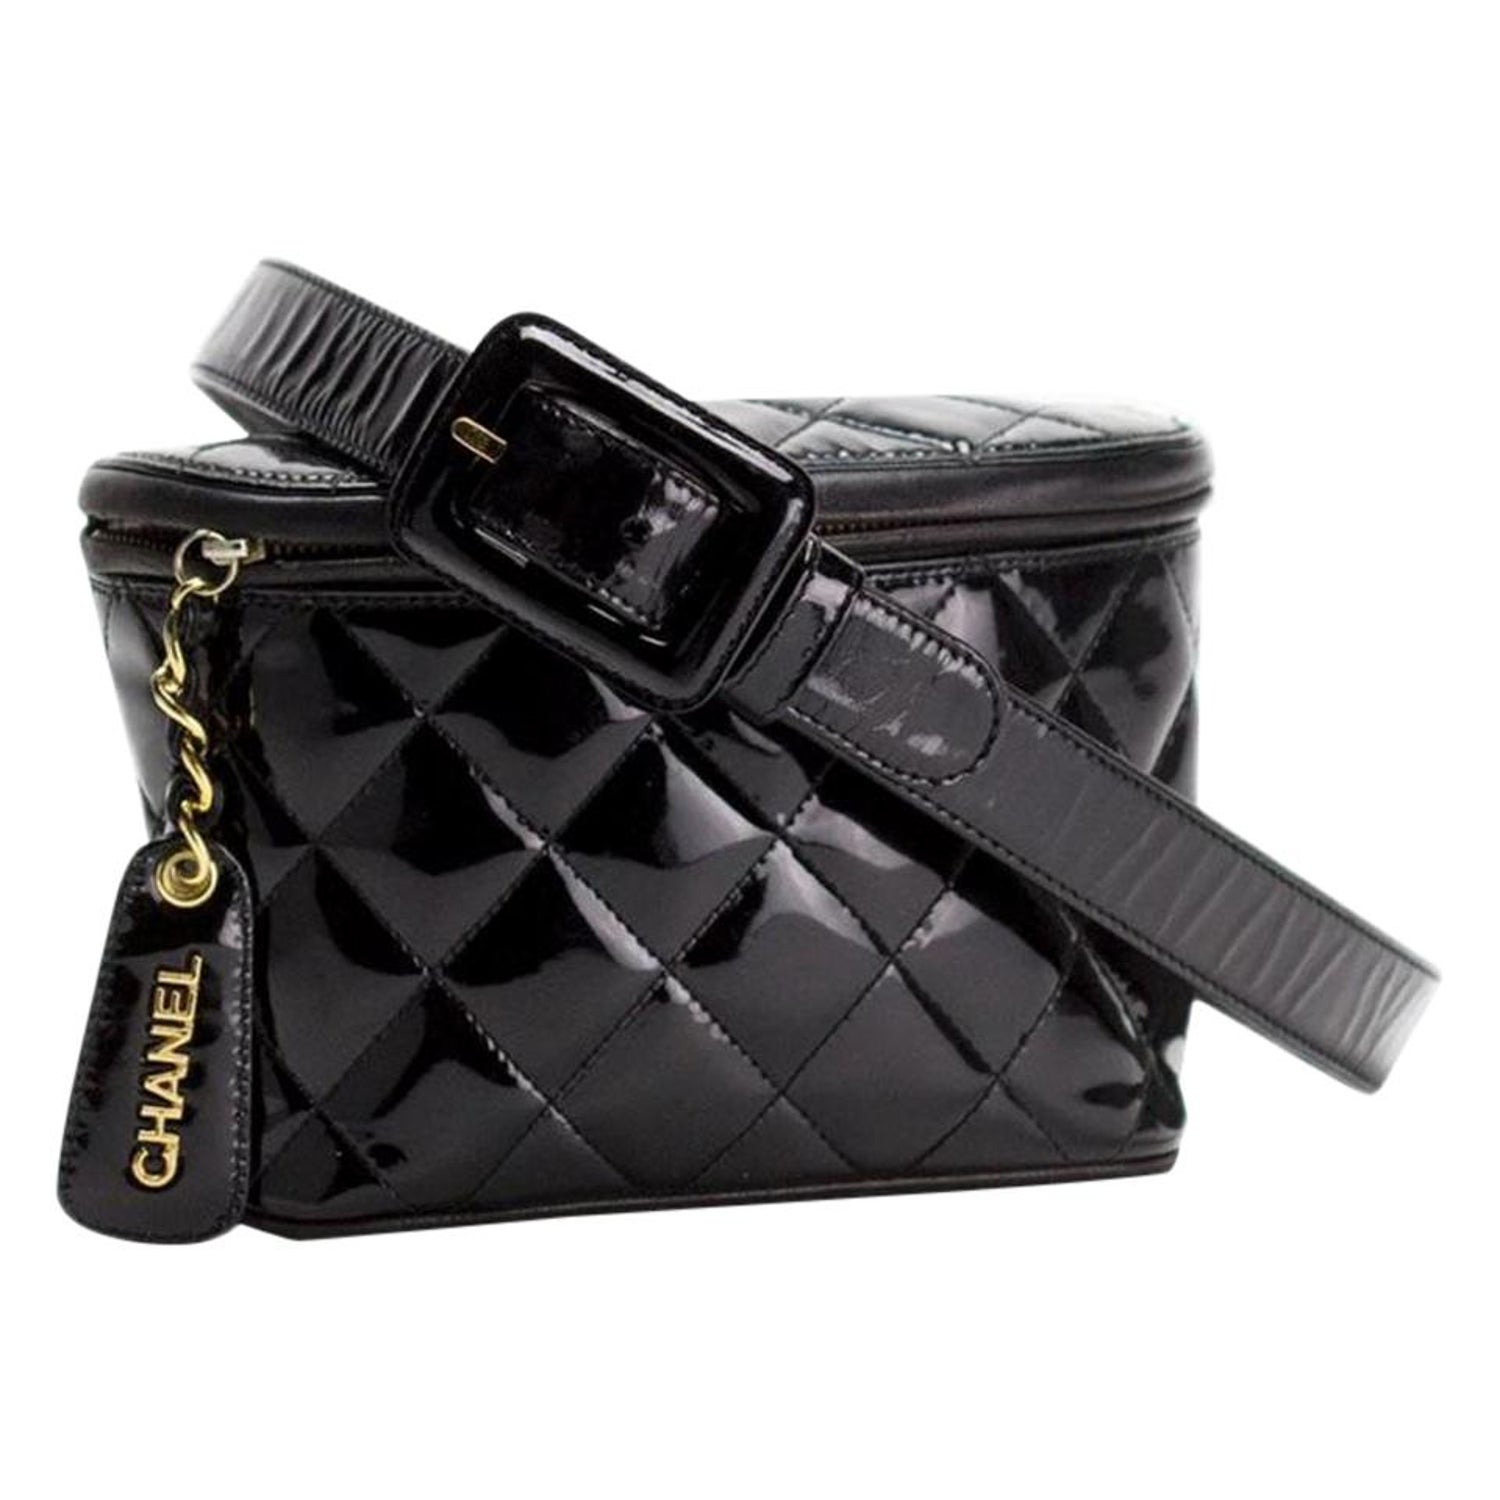 Chanel Waist Vintage Rare 1994 Belt Bum Fanny Pack Black Patent Leather Bag